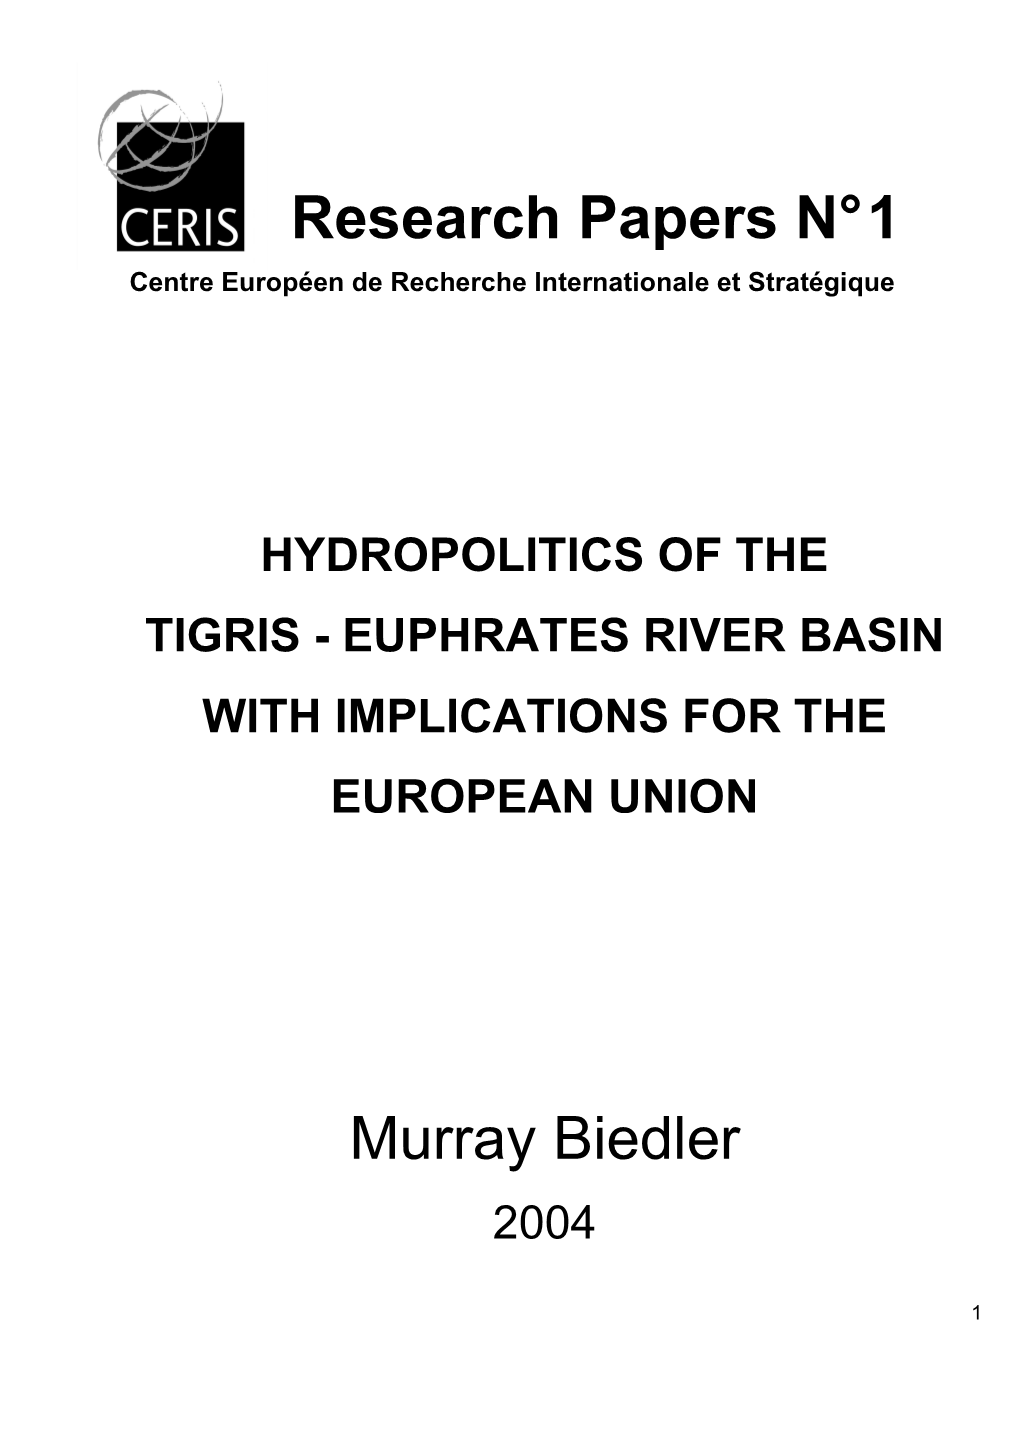 Research Papers N° 1 Murray Biedler